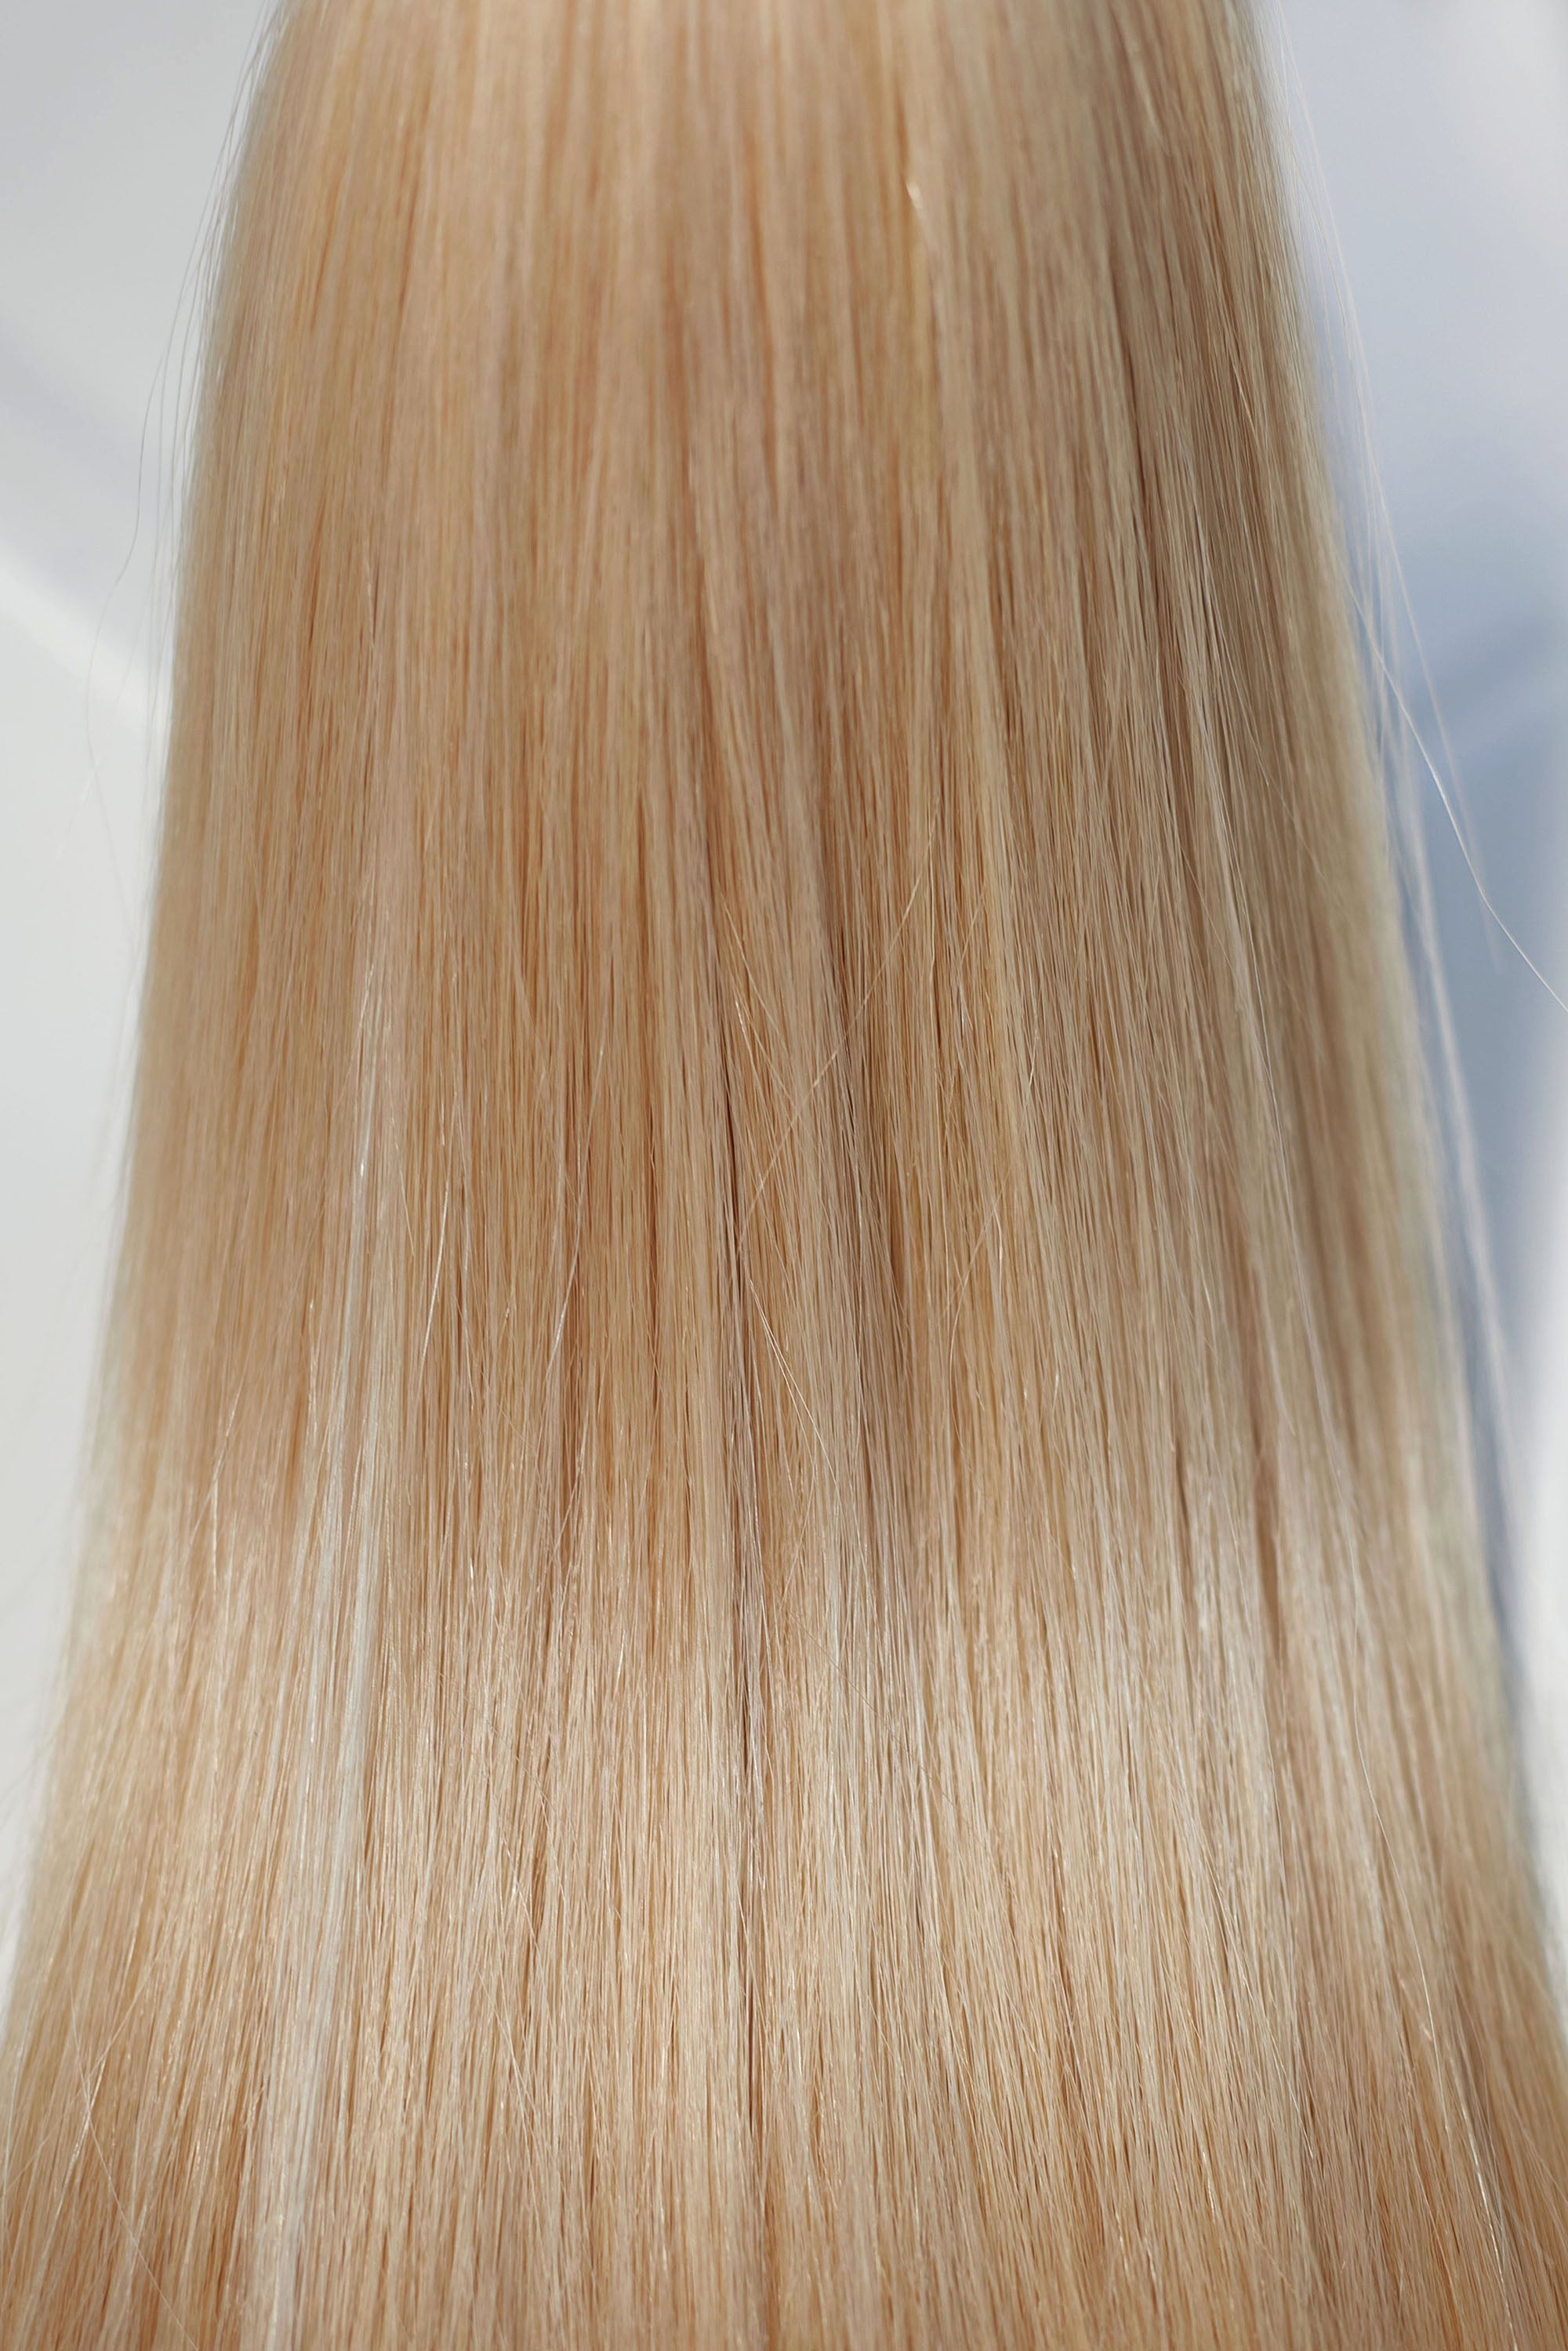 Behair professional Keratin Tip "Premium" 16" (40cm) Natural Straight Light Gold Blond #24 - 25g (Micro - 0.5g each pcs) hair extensions